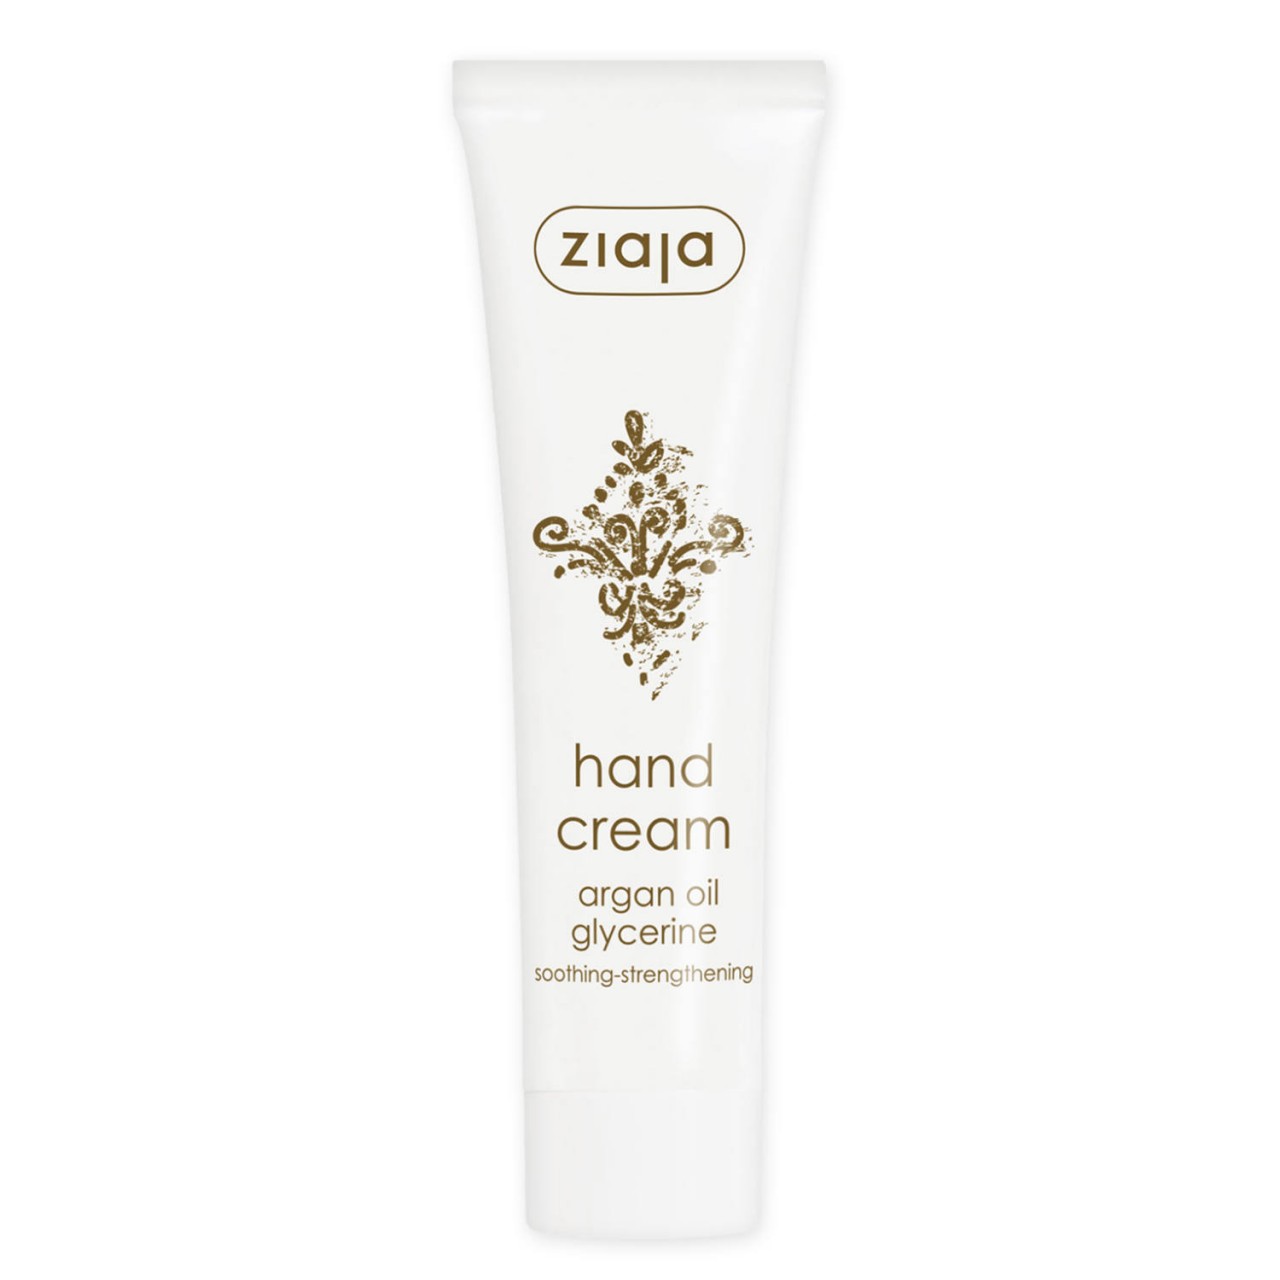 Ziaja Argan Oil Hand Cream